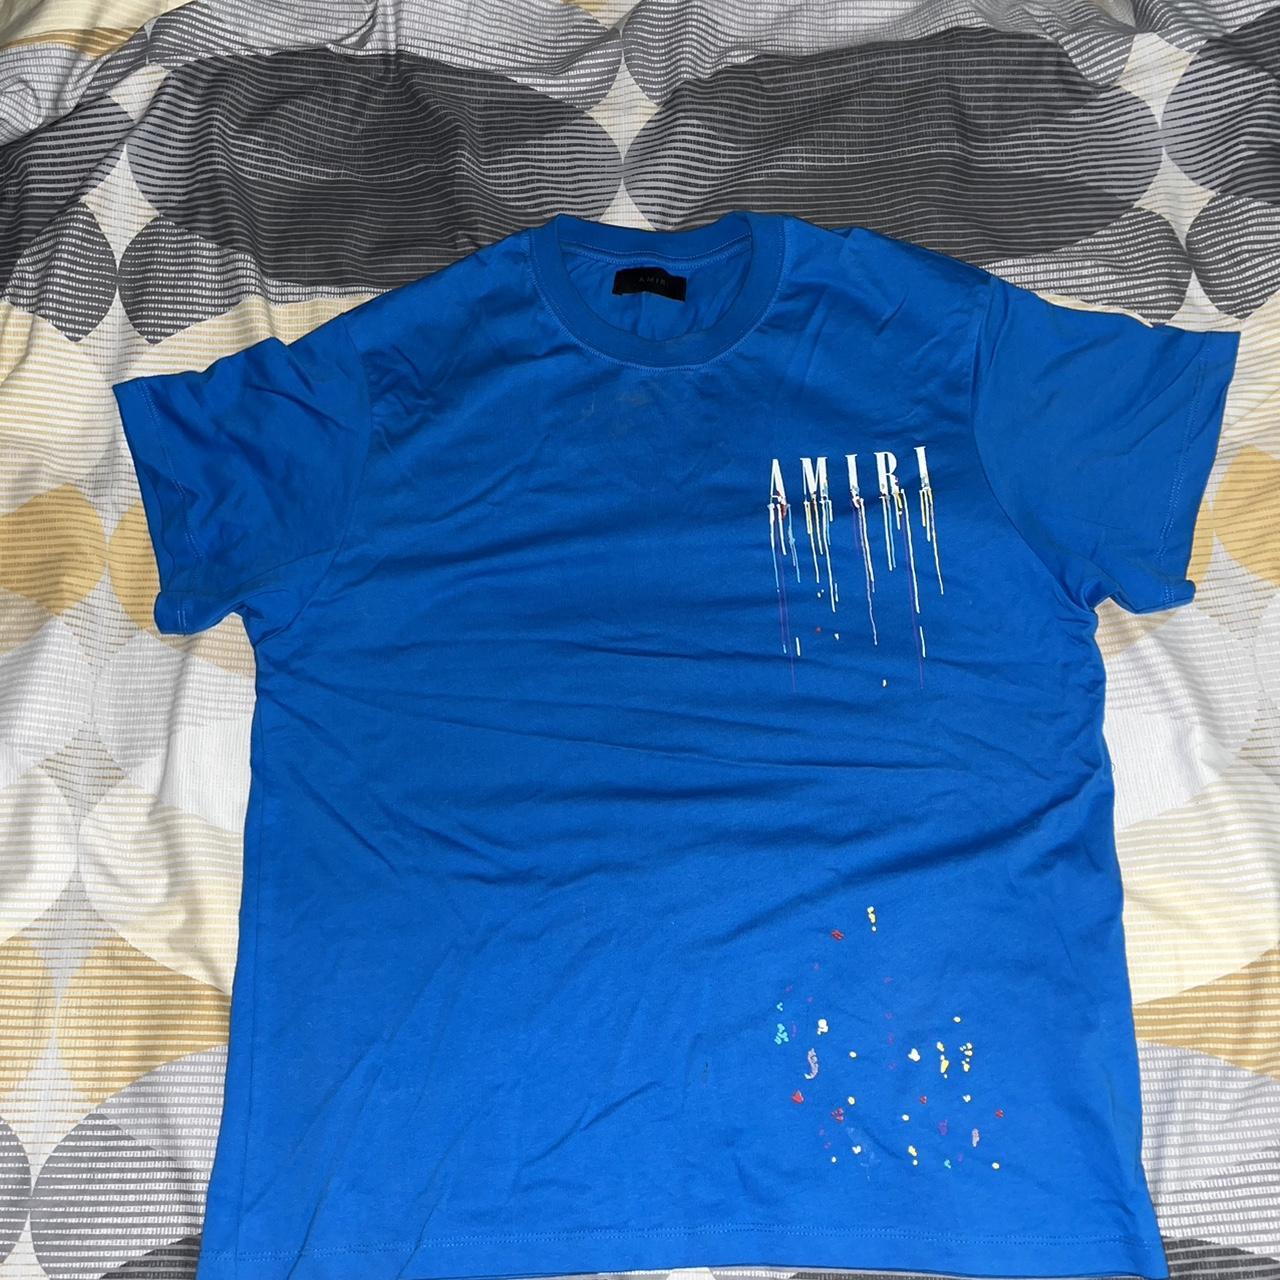 Amiri paint splatter tshirt  Paint splatter, Painting, Shopping tshirt